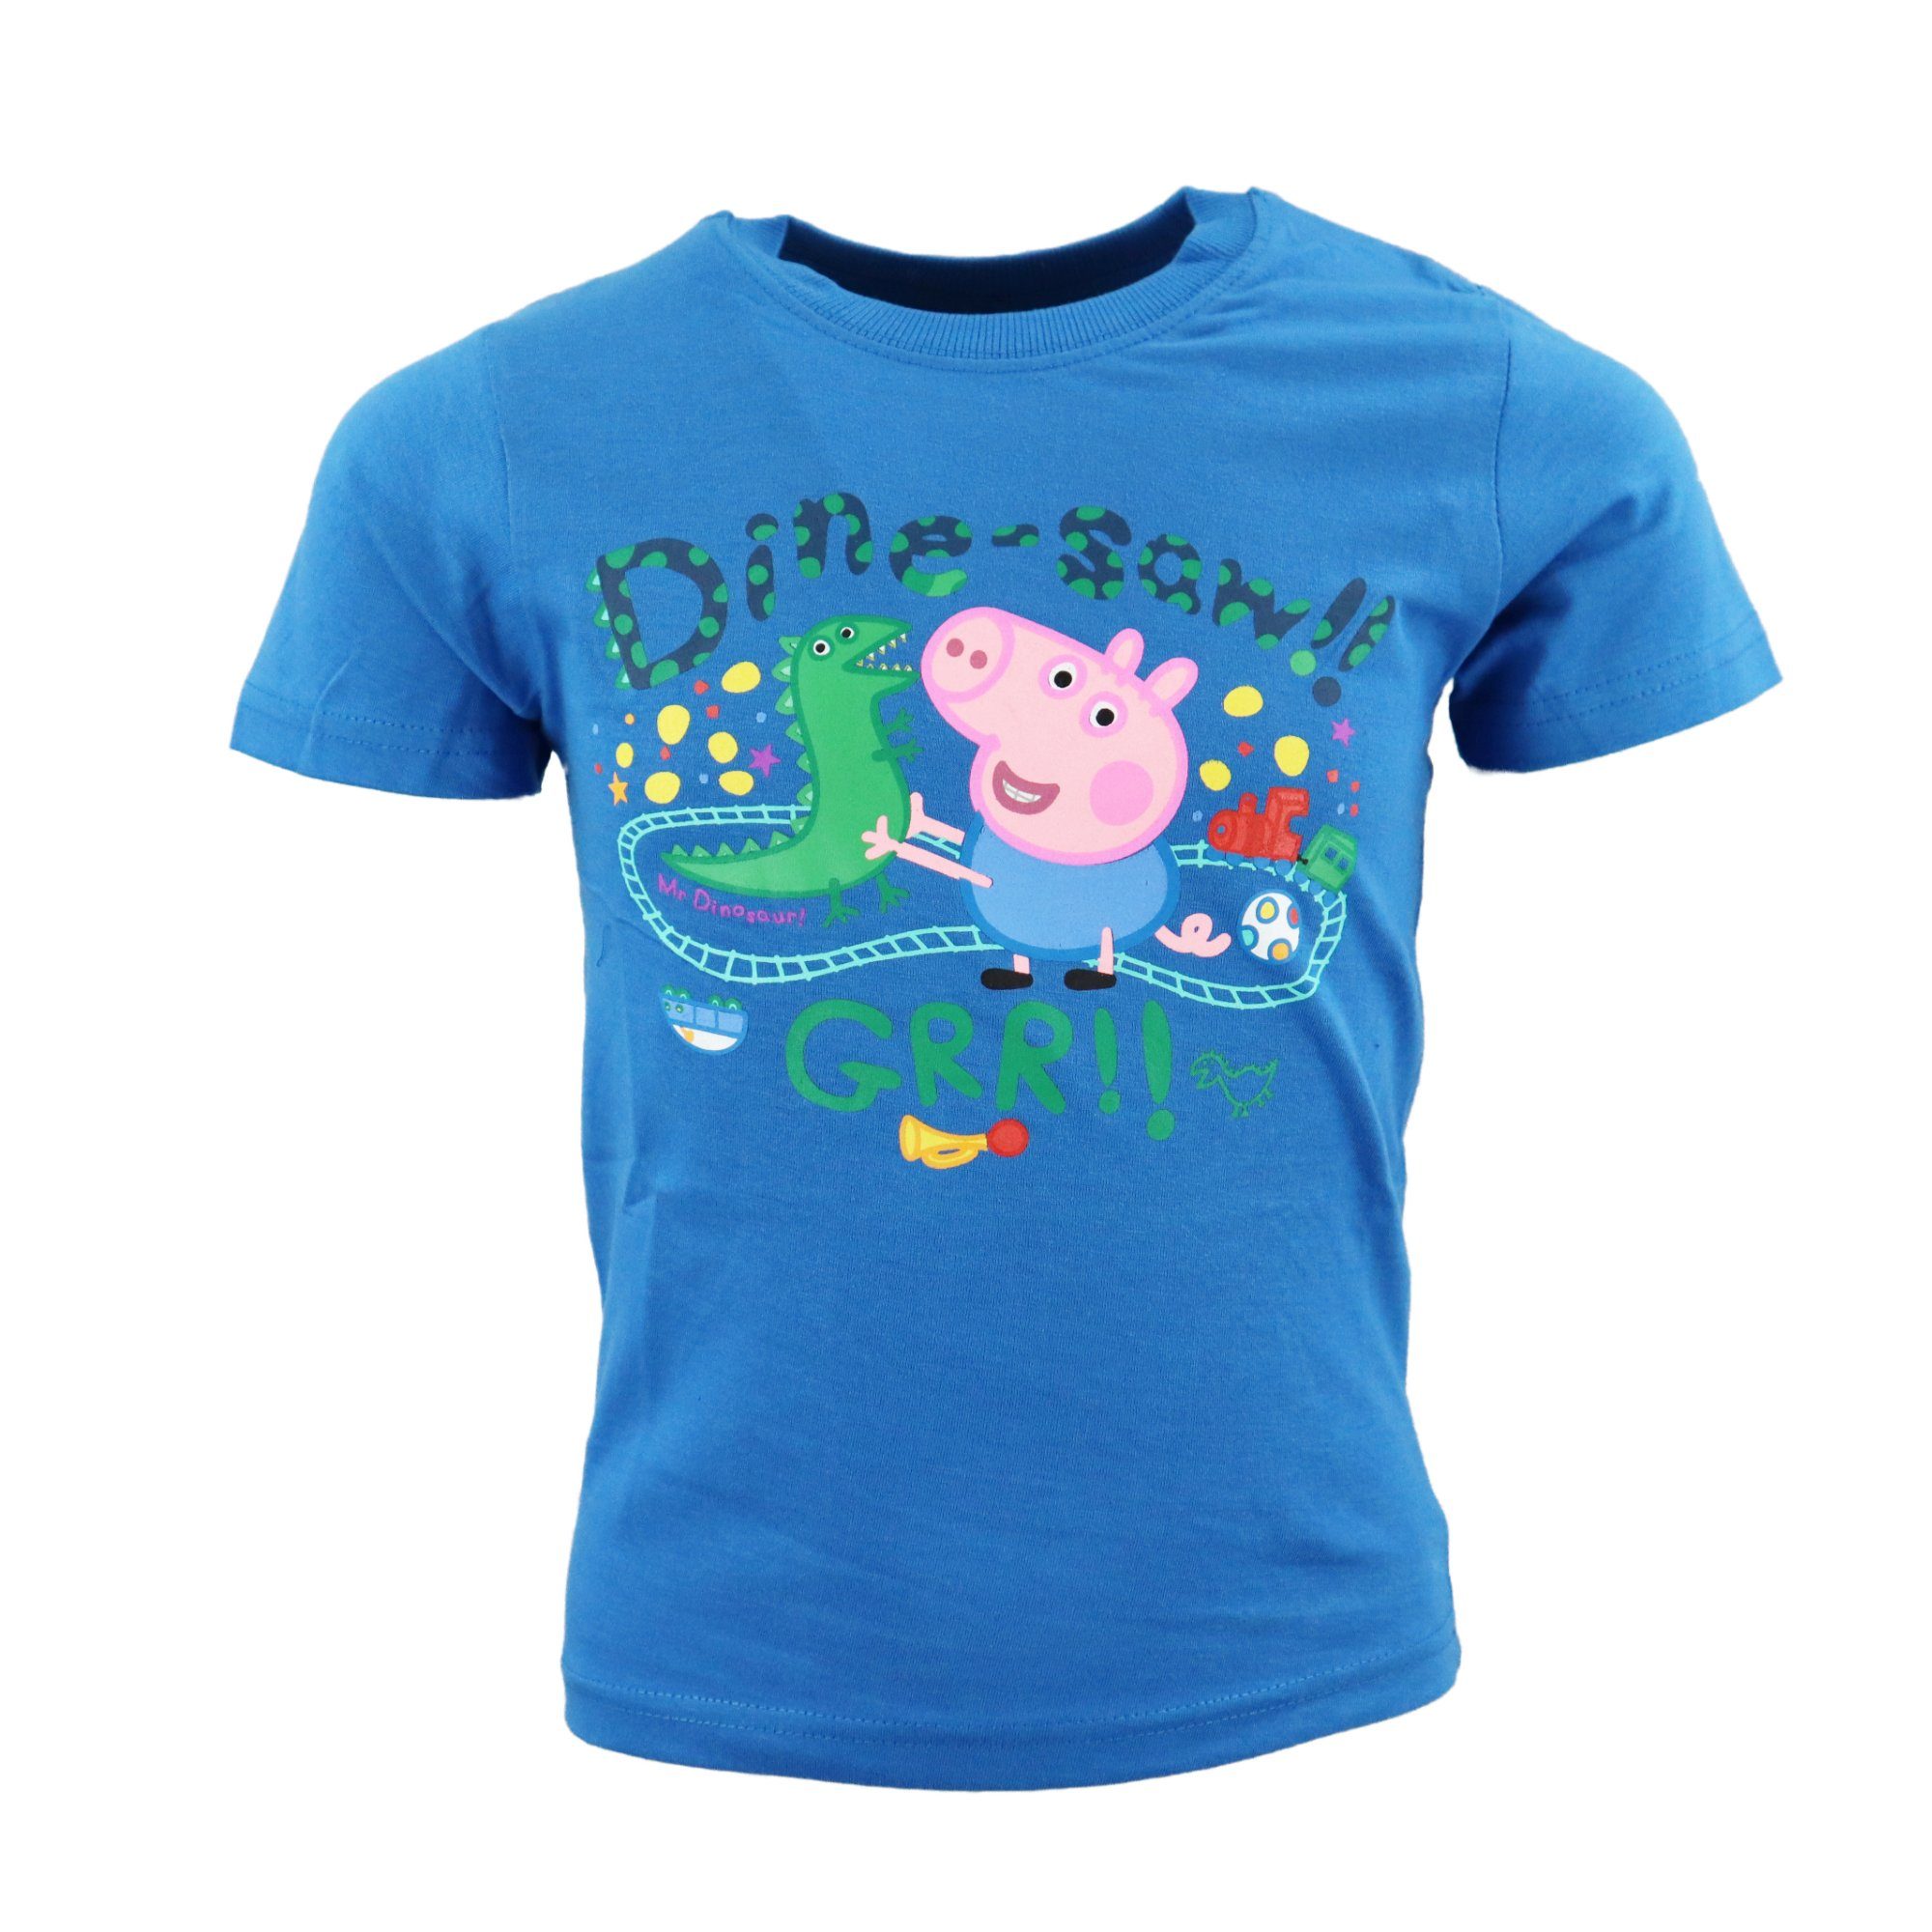 Peppa Pig Print-Shirt Peppa Wutz T-Shirt Baumwolle George Blau 116, Gr. Kinder 92 Saurier bis